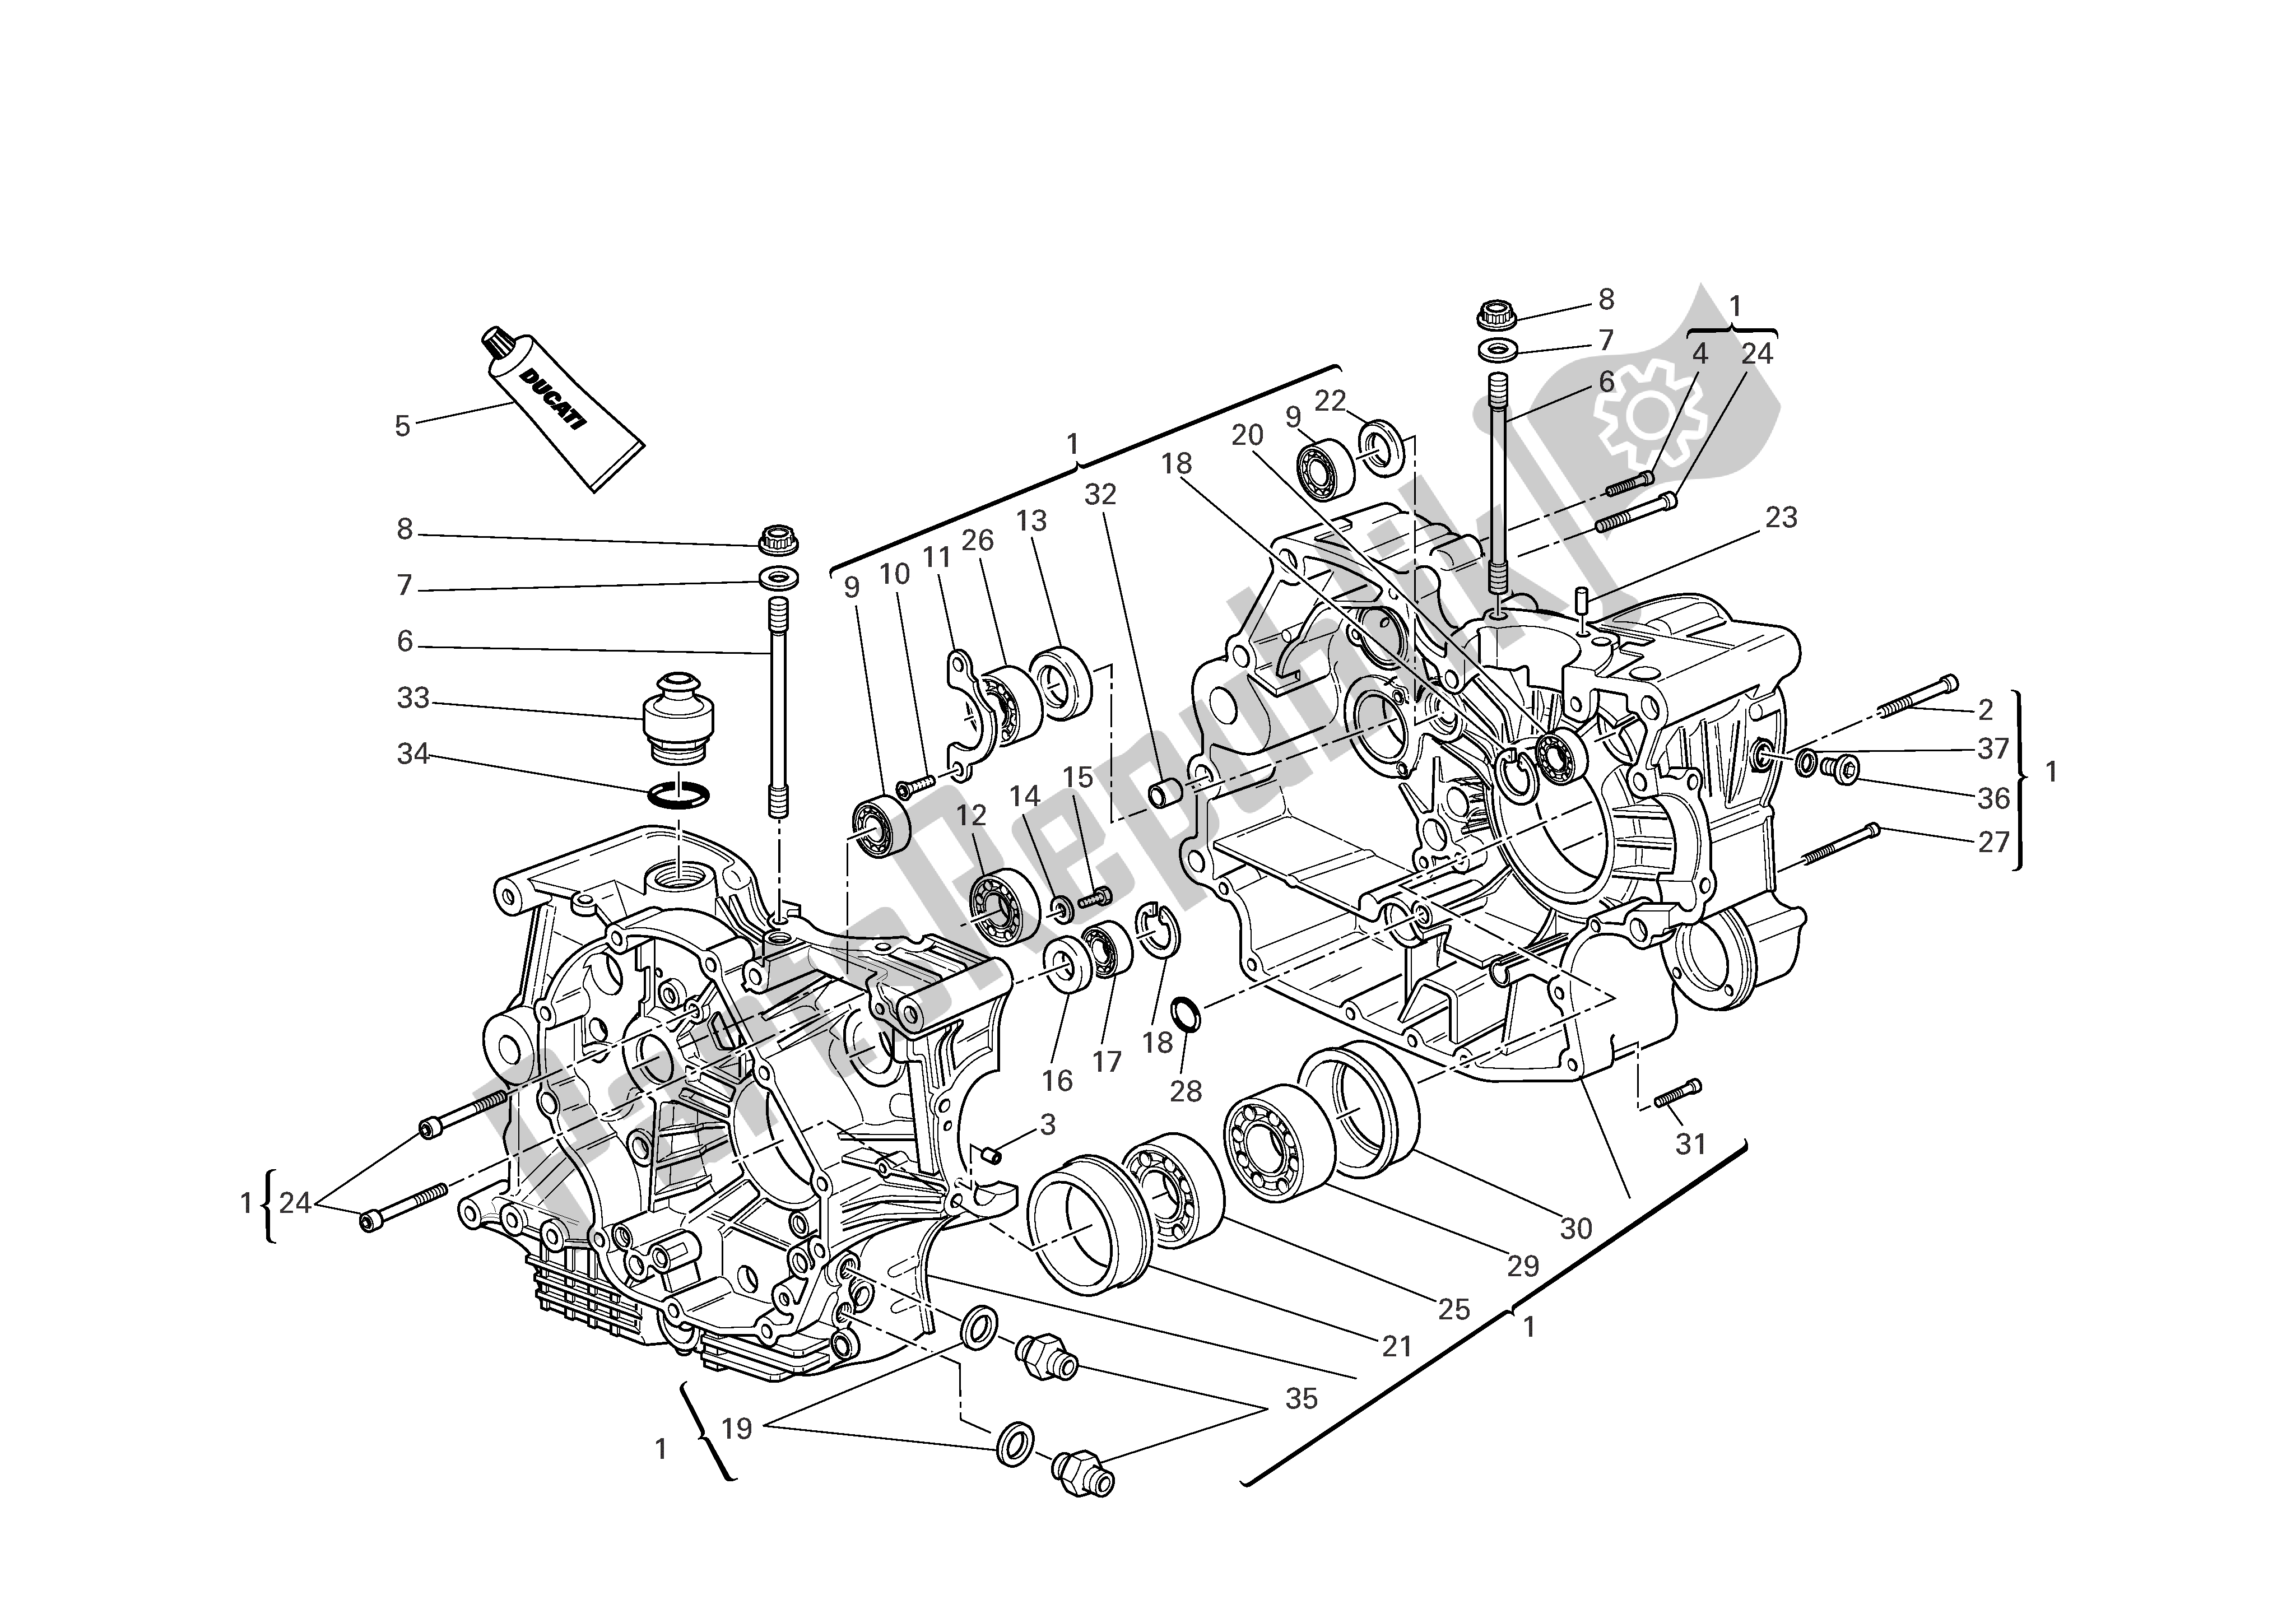 All parts for the Crankcase Halves of the Ducati Multistrada 1000 2005